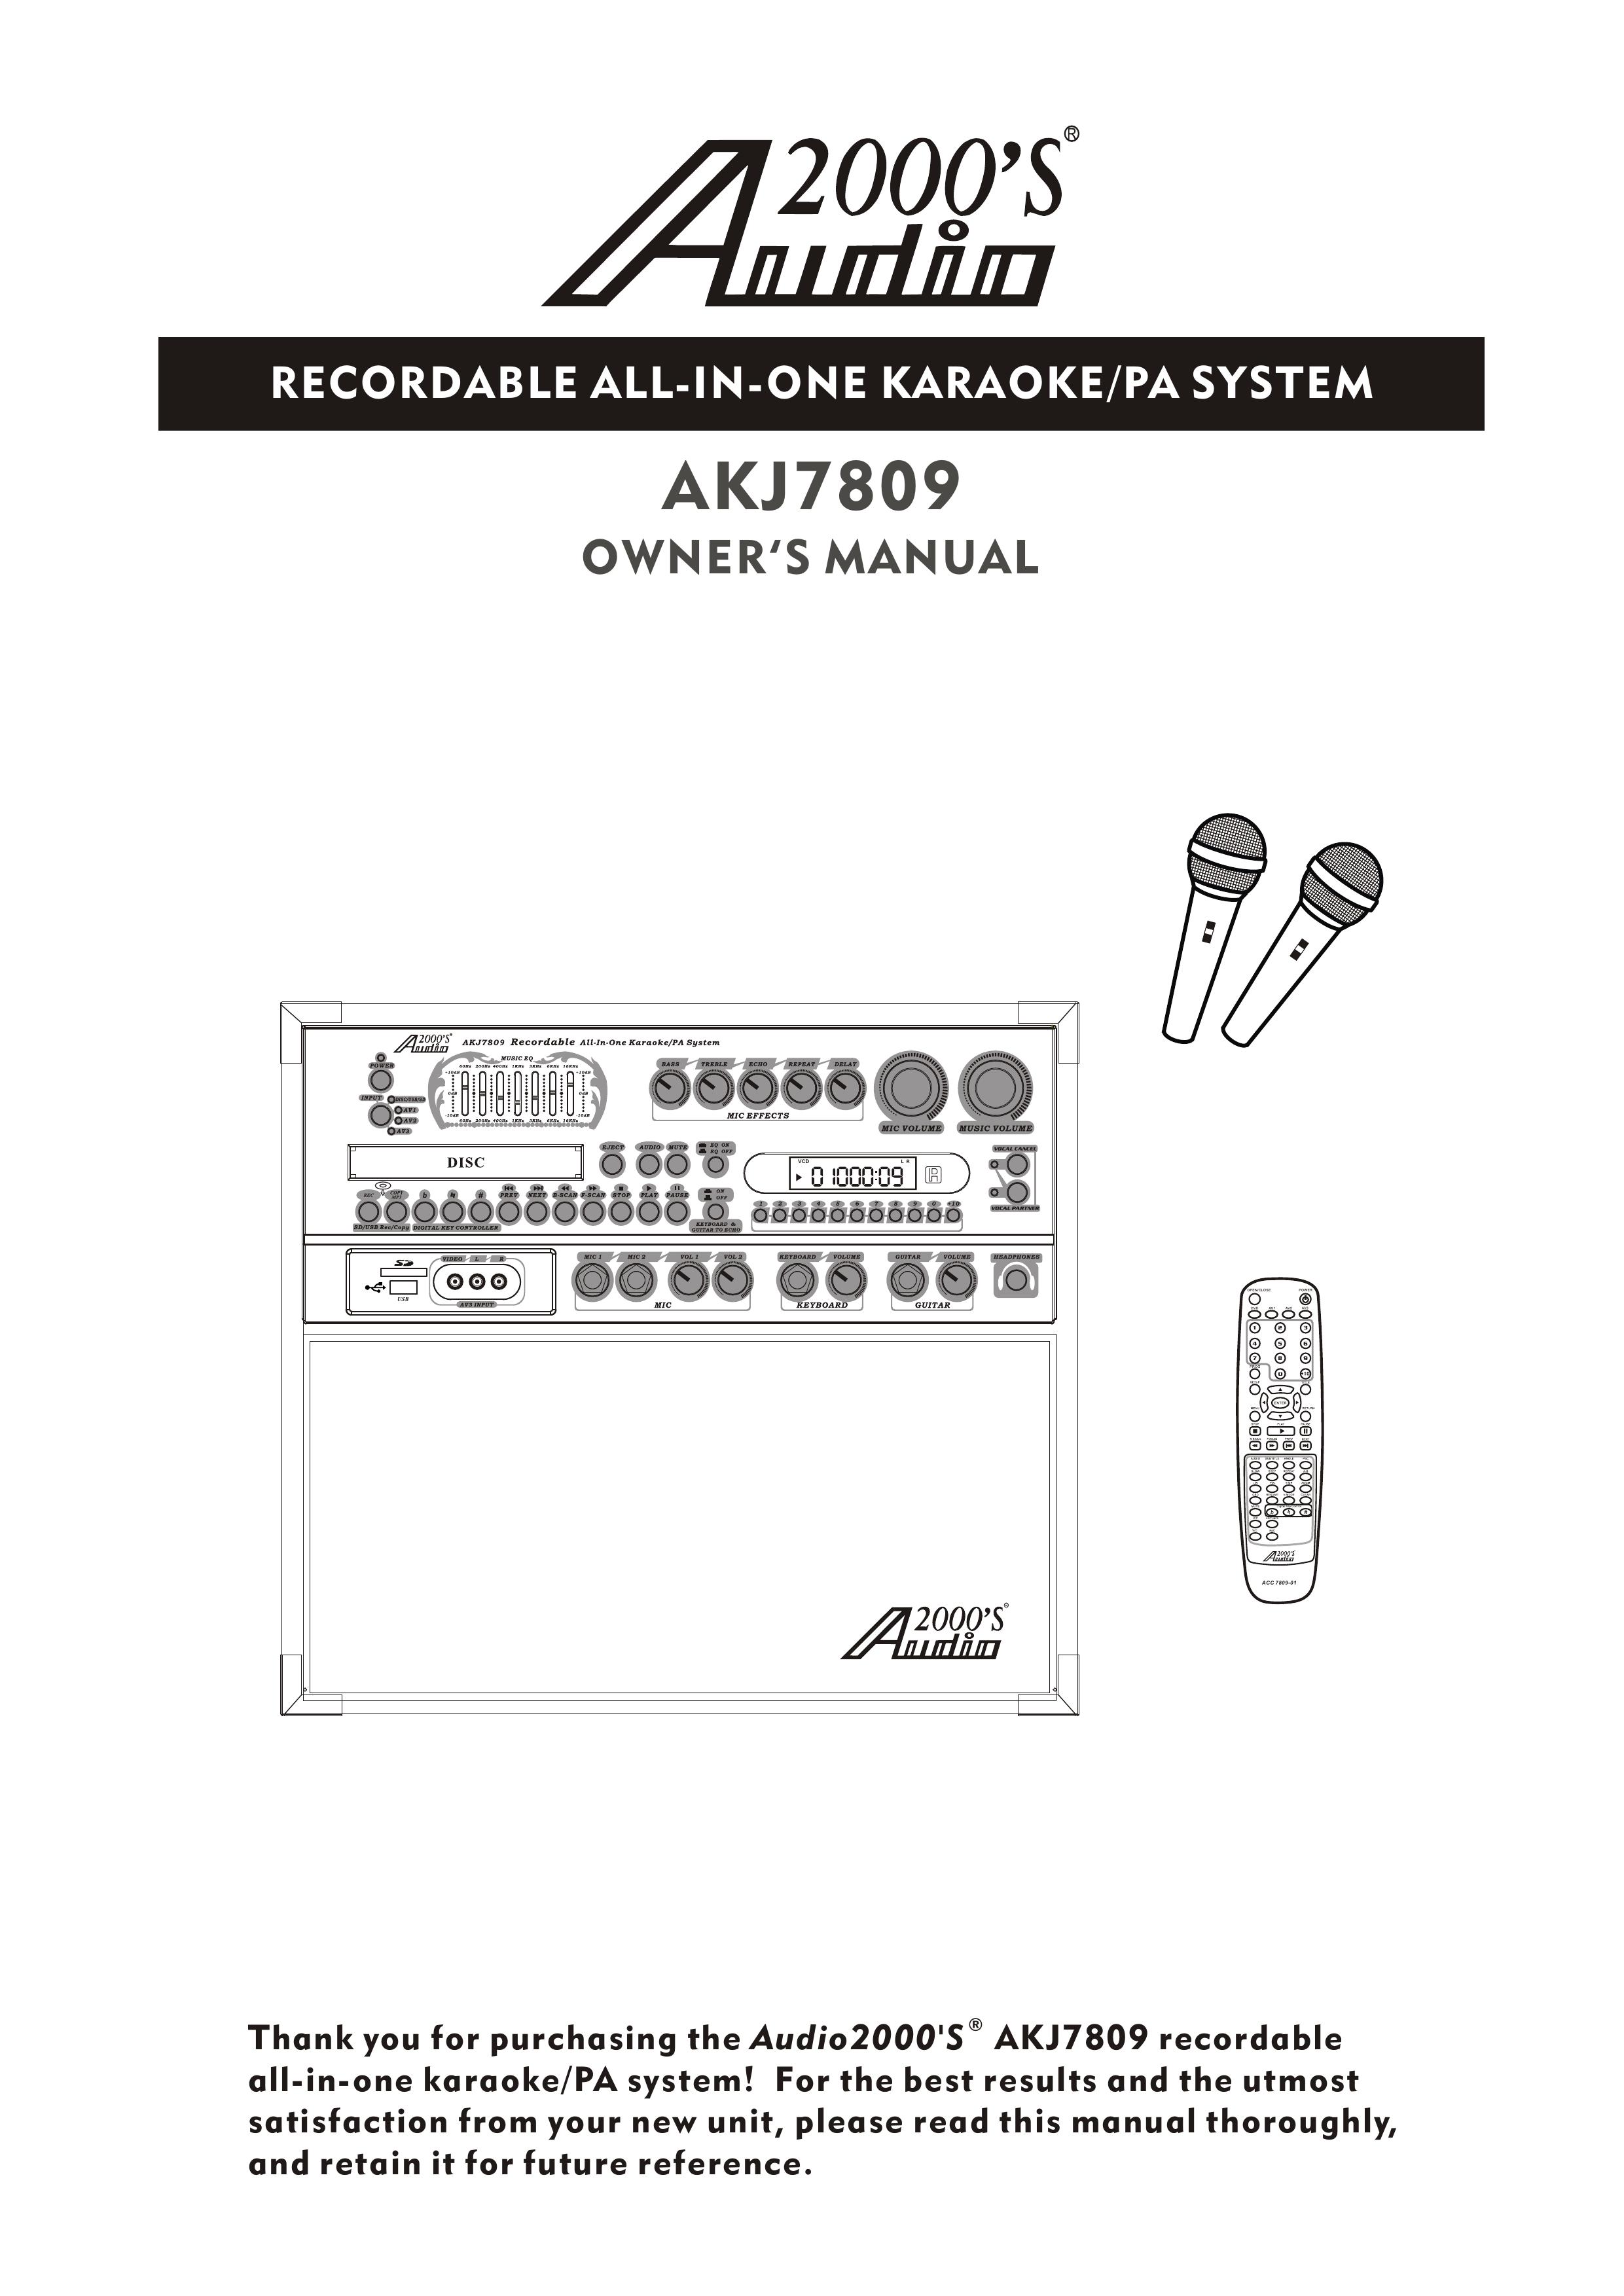 Audio2000's AKJ7809 Karaoke Machine User Manual